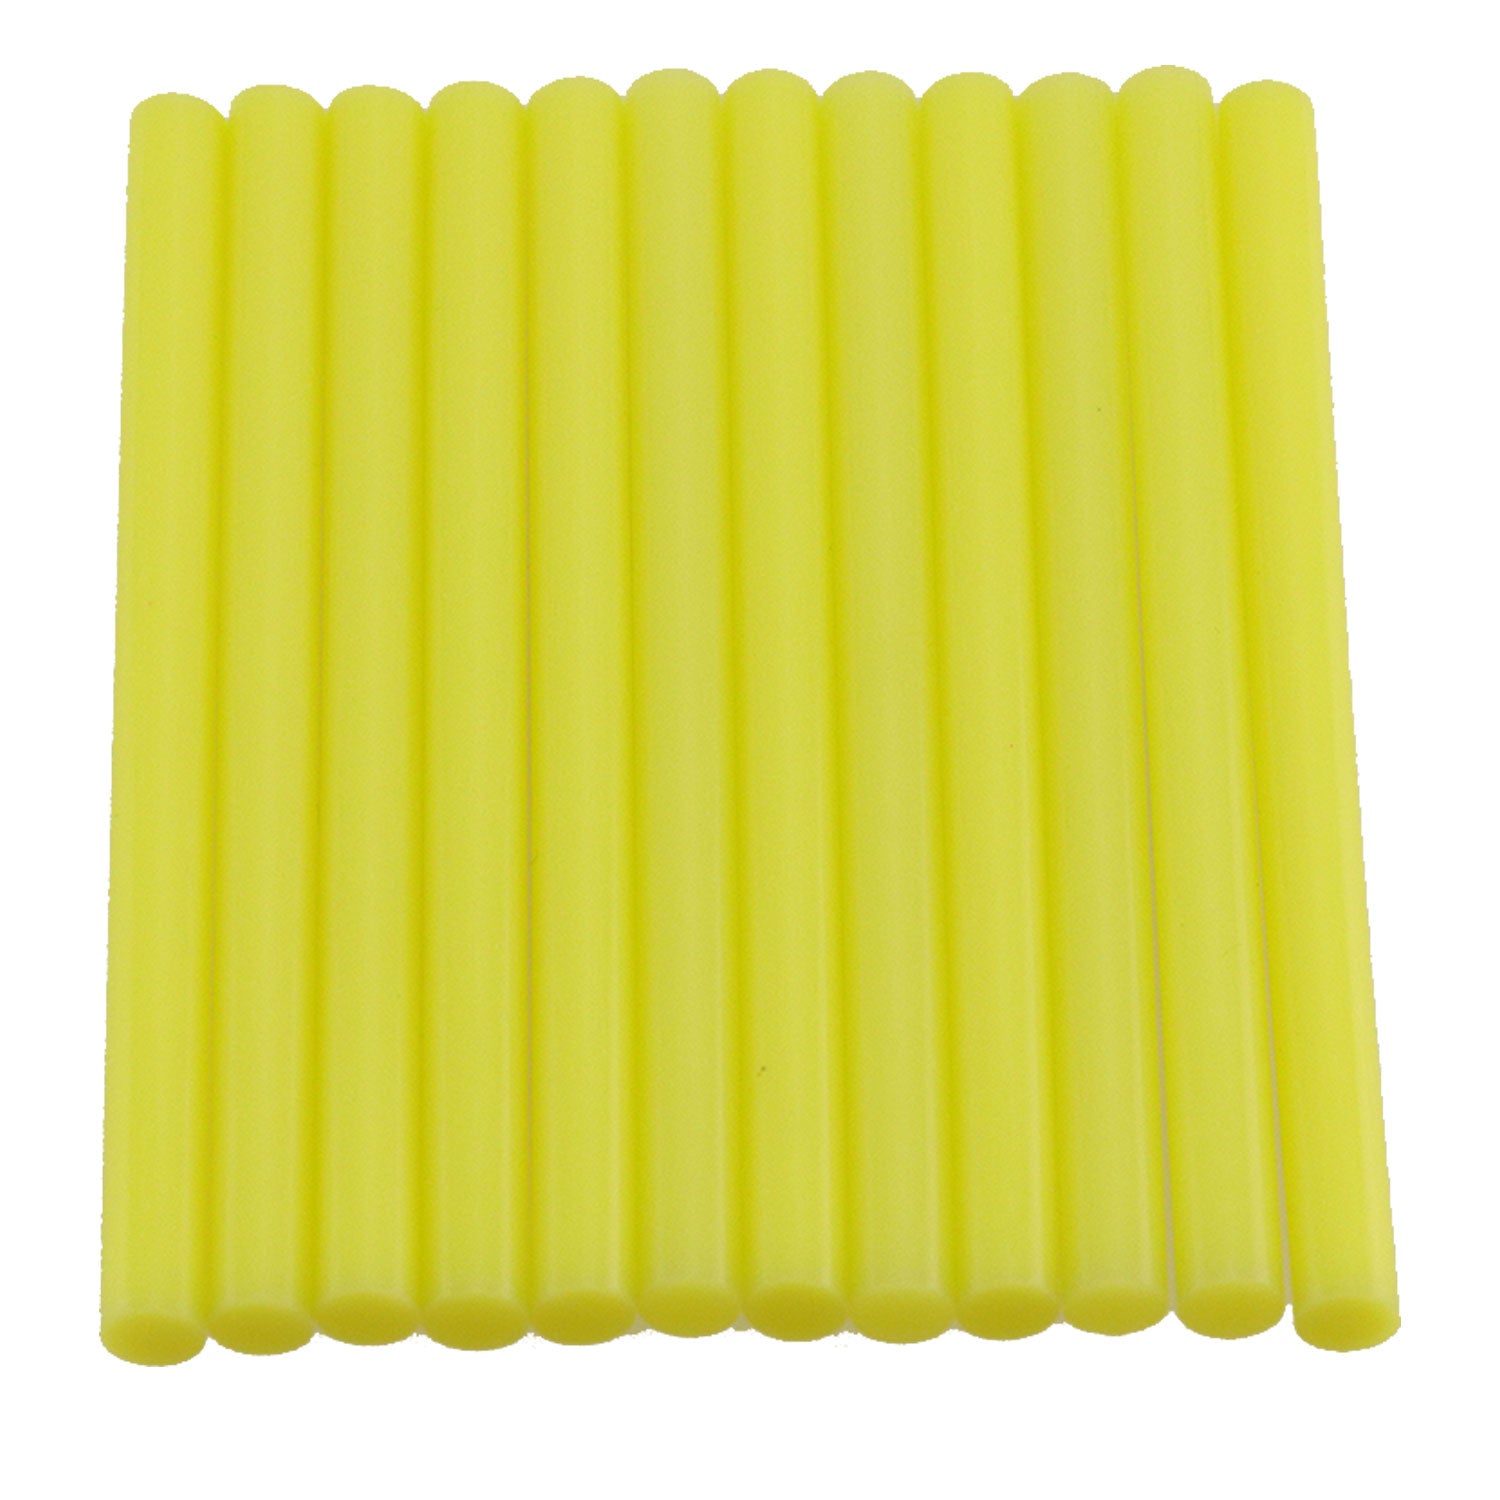 725M54CYELLOW Mini Size 4 Yellow Color Hot Glue Stick - 5 lb Box –  Surebonder